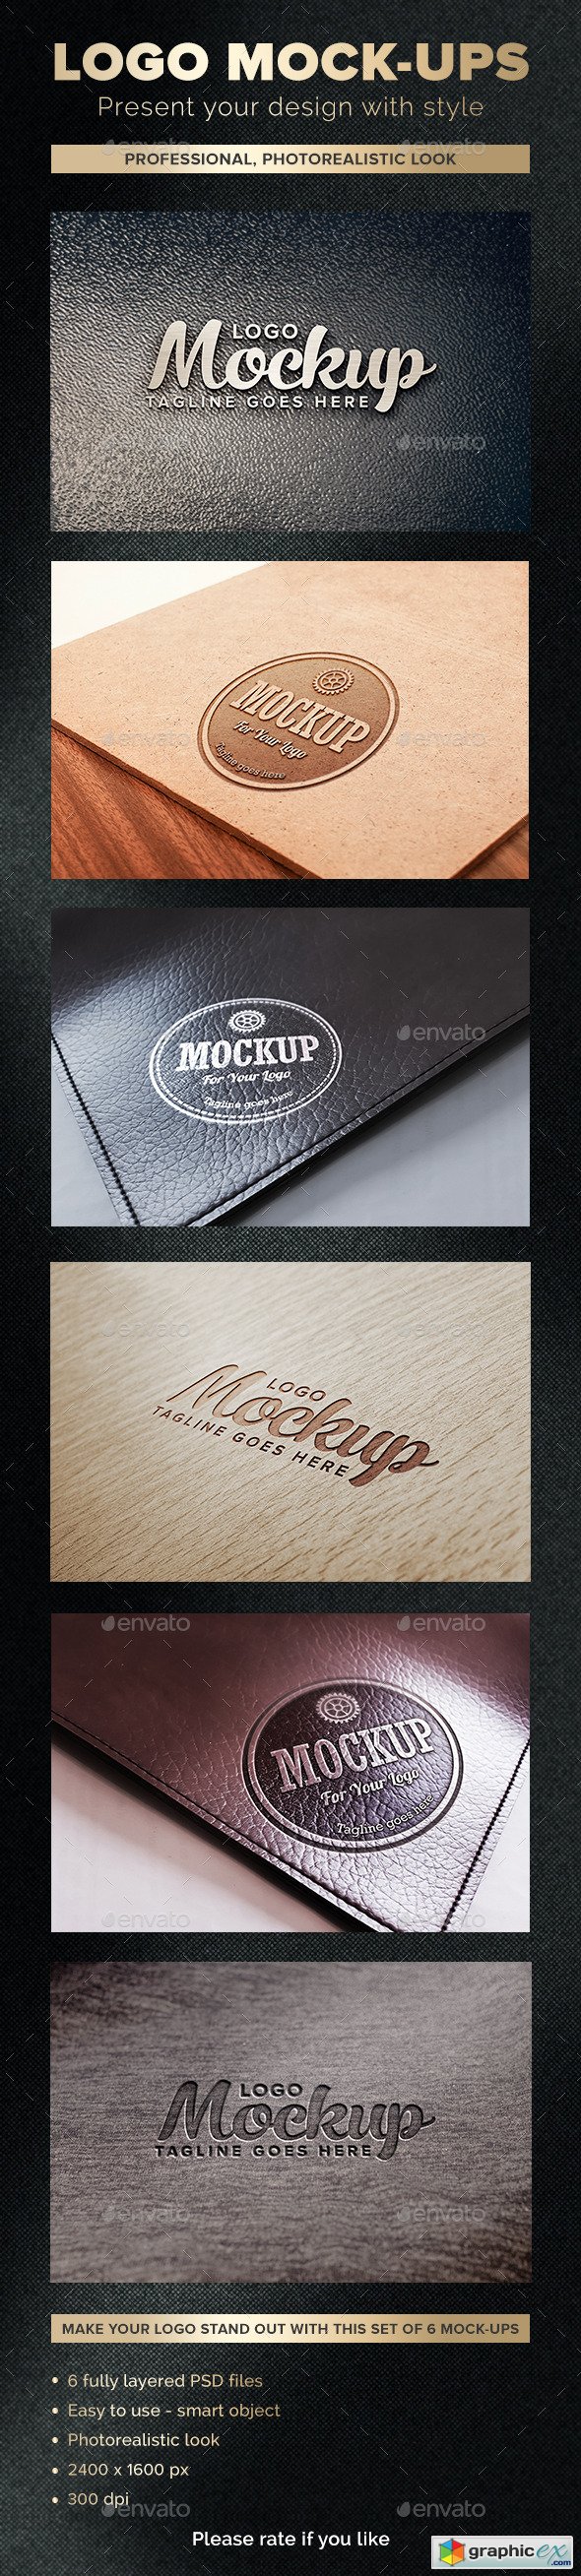  Logo Mockups 10300683 